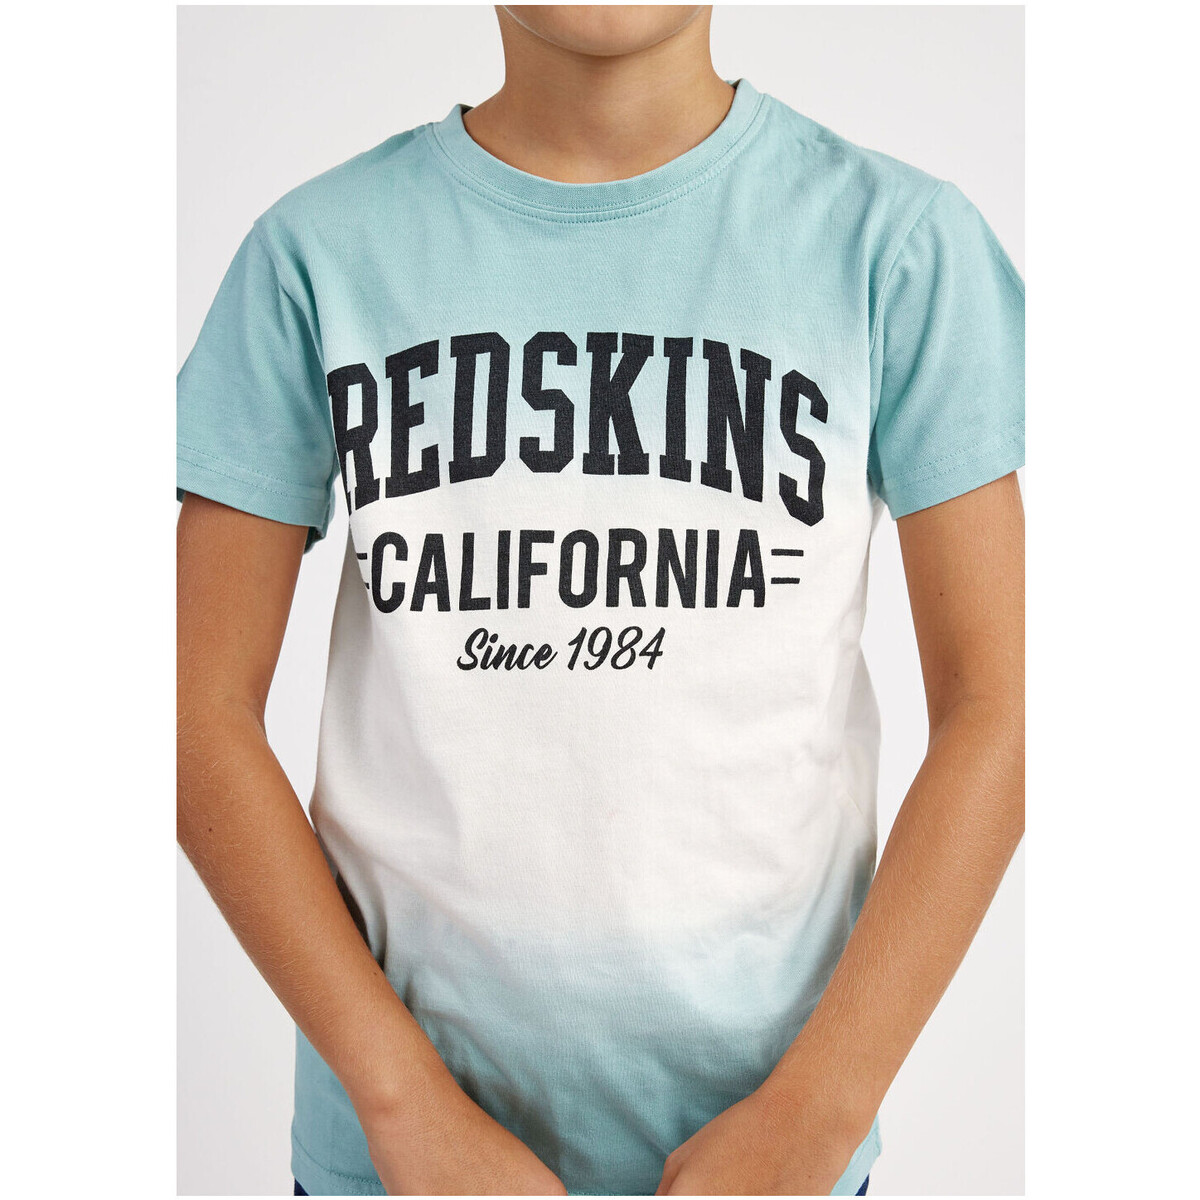 Redskins Bleu Tshirt Enfant 45603 Xrf36QUL